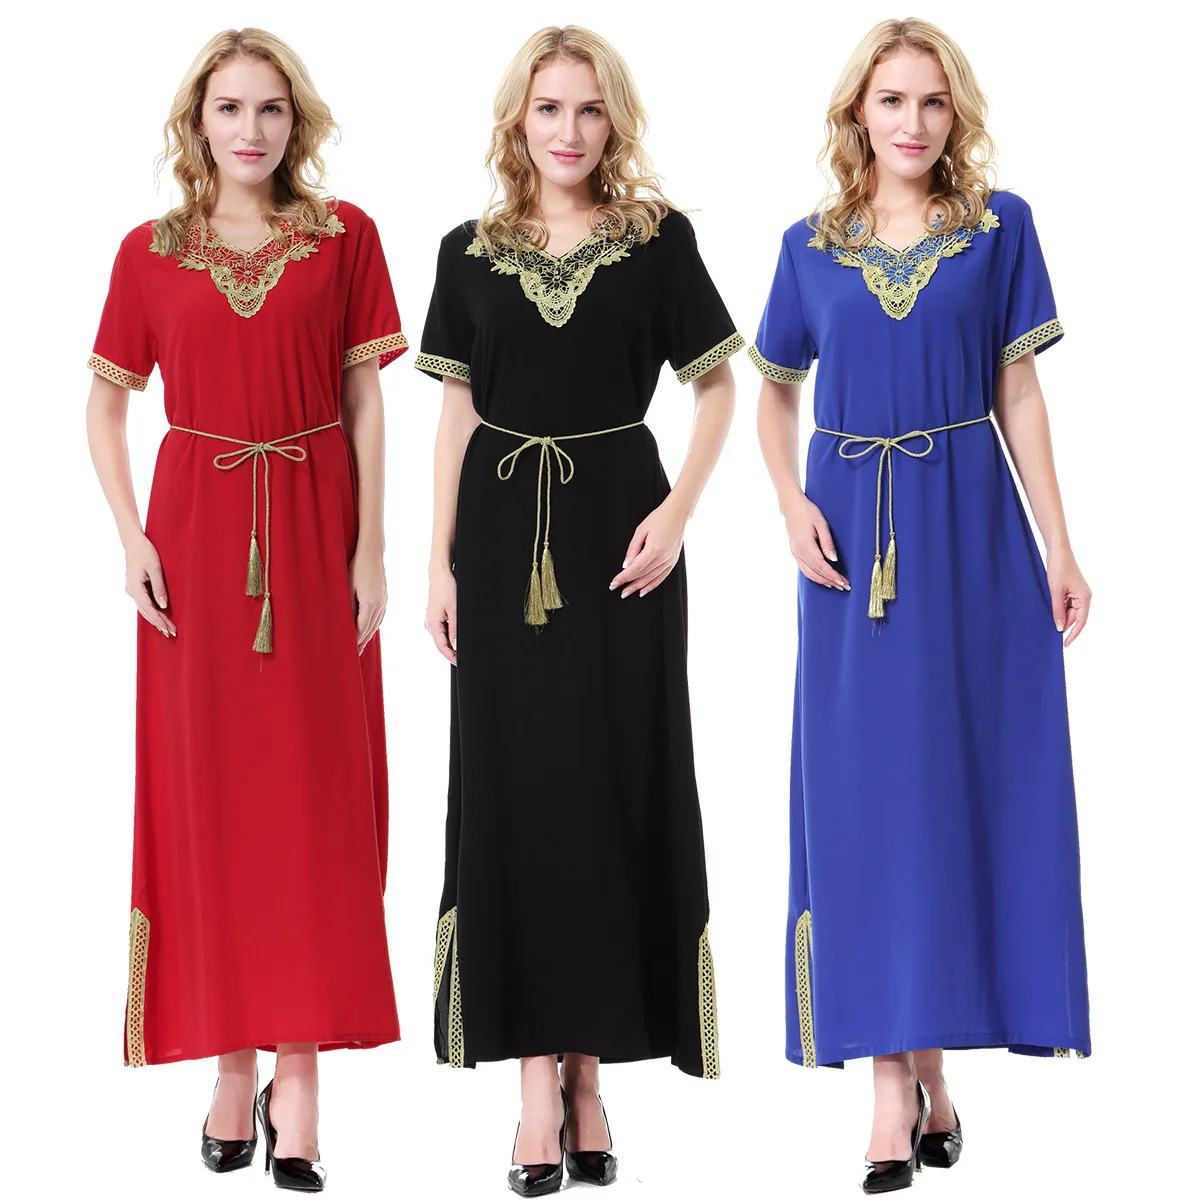 

Plus Size Short Sleeve Ribbon Lace Embroidery Middle East Arabian Robe Muslim Caftan Dubai Dress for Women Islamic Clothing